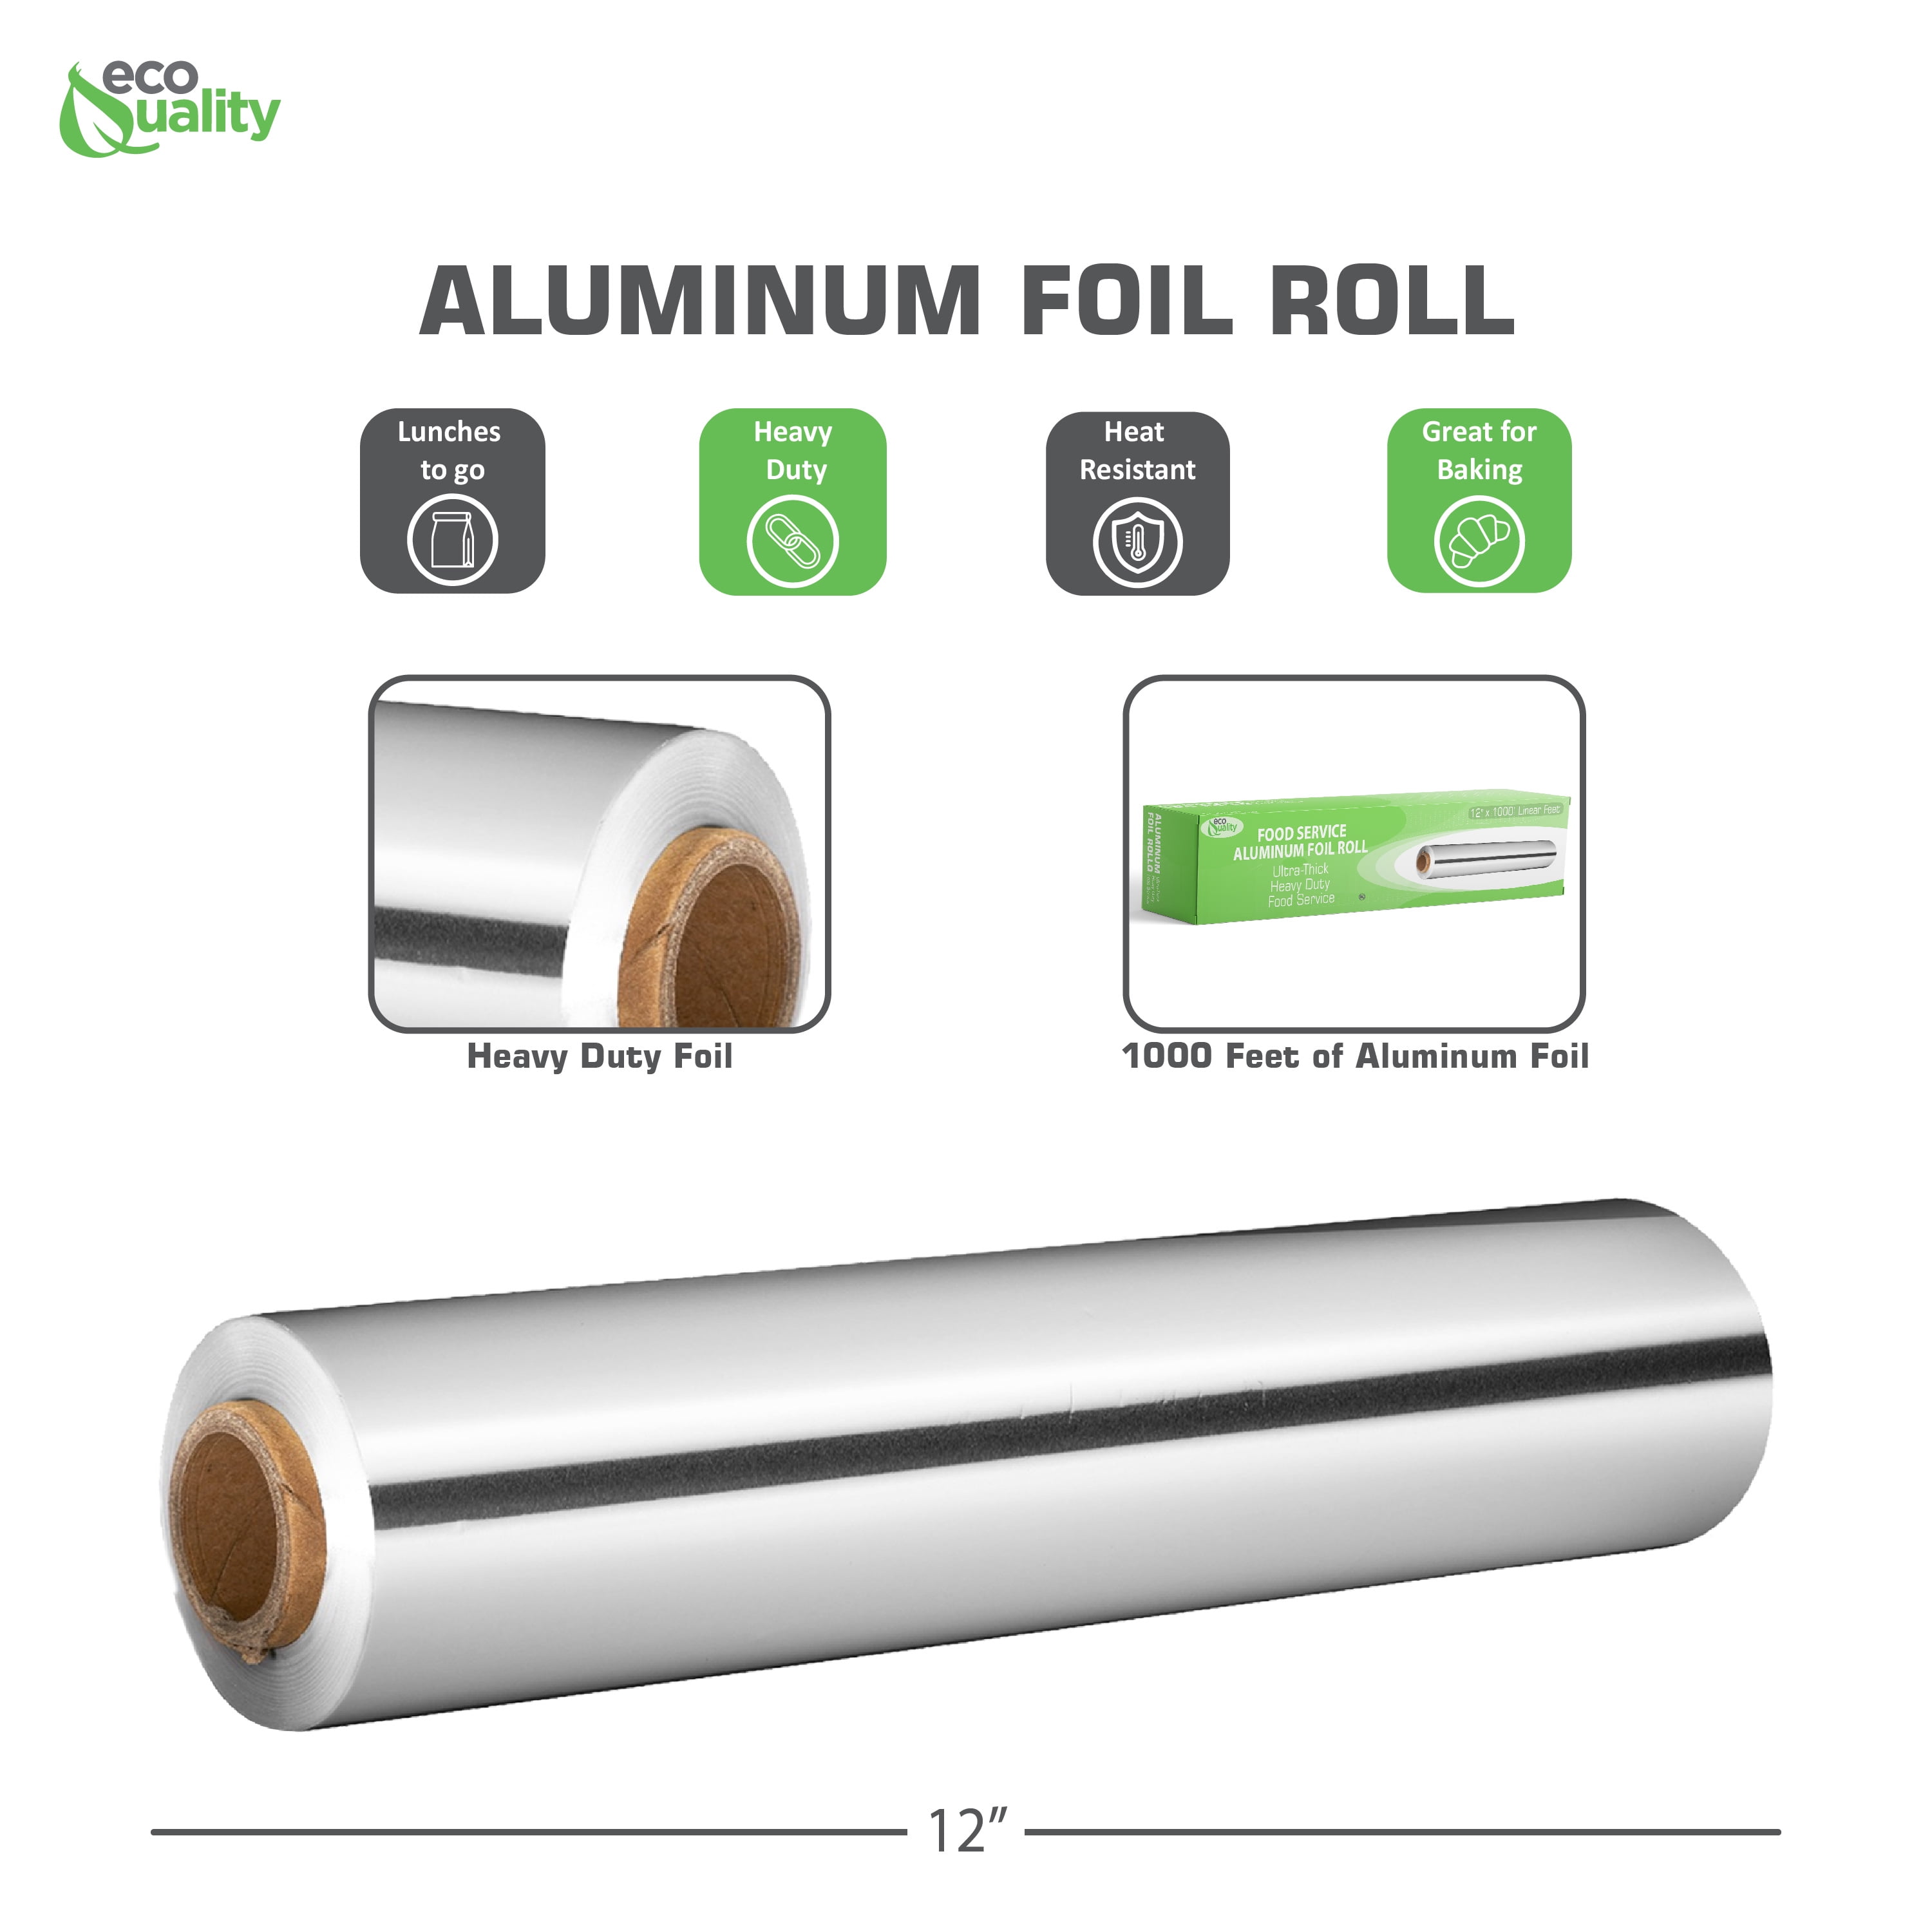 RW Base Foodservice Heavy-Duty Aluminum Foil Roll - 12 x 500' - 1 count box